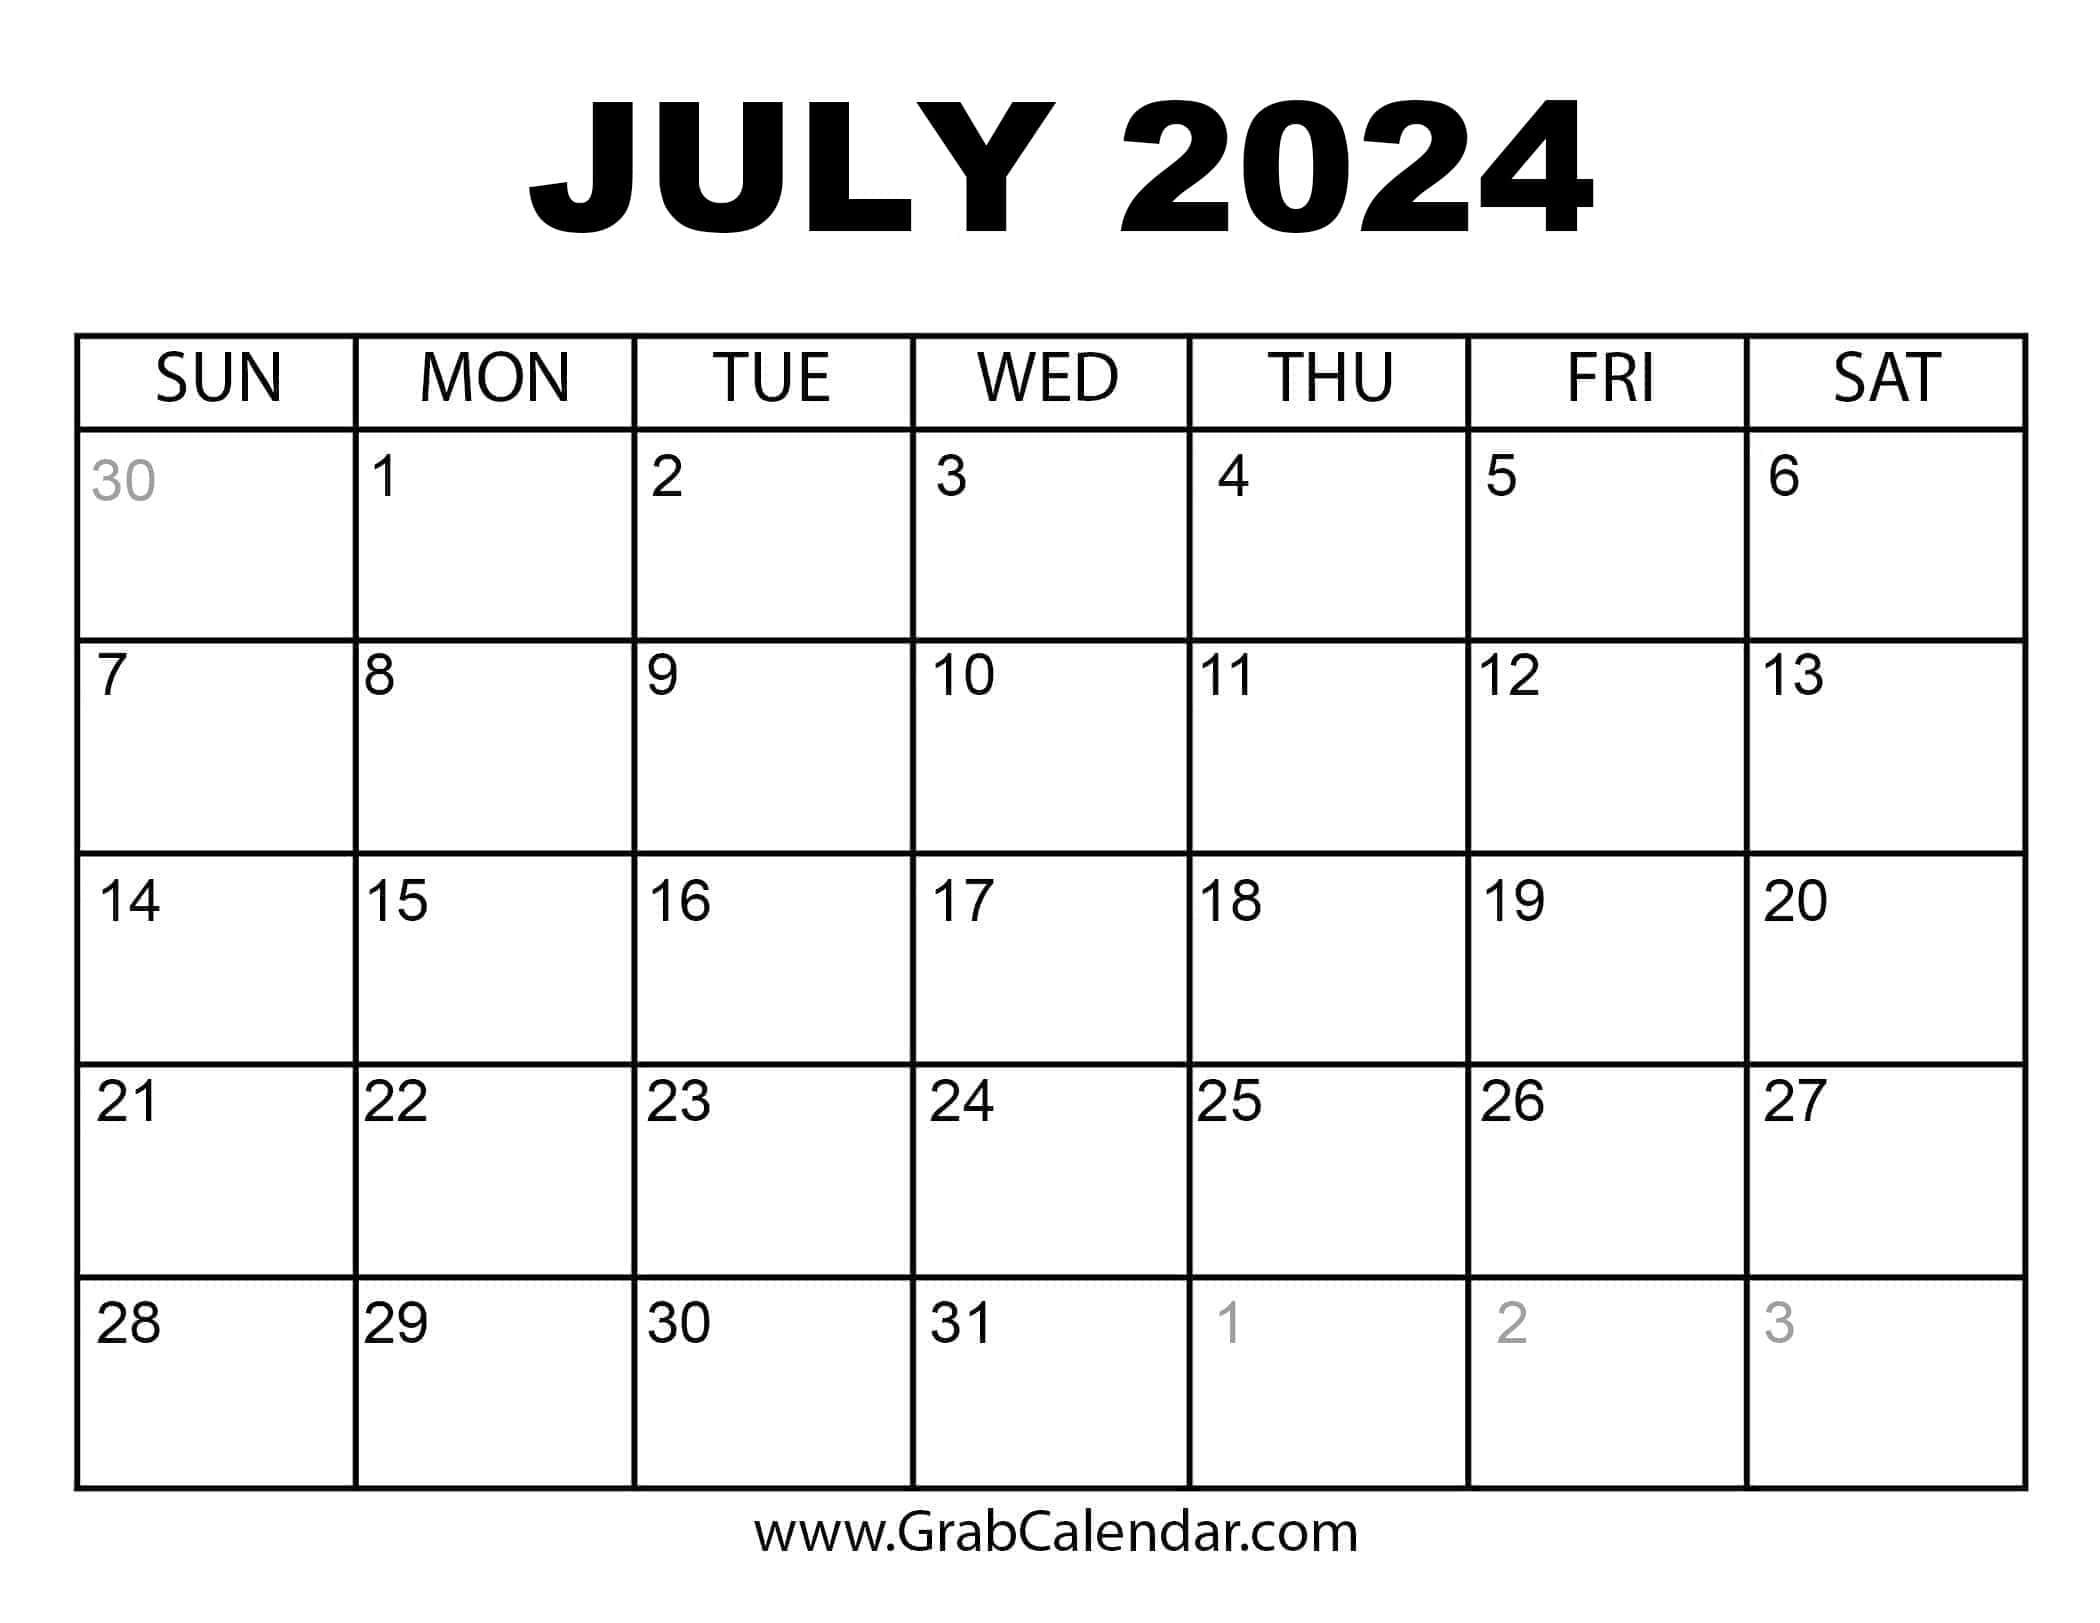 Printable July 2024 Calendar | Let Me See The Calendar For July 2024